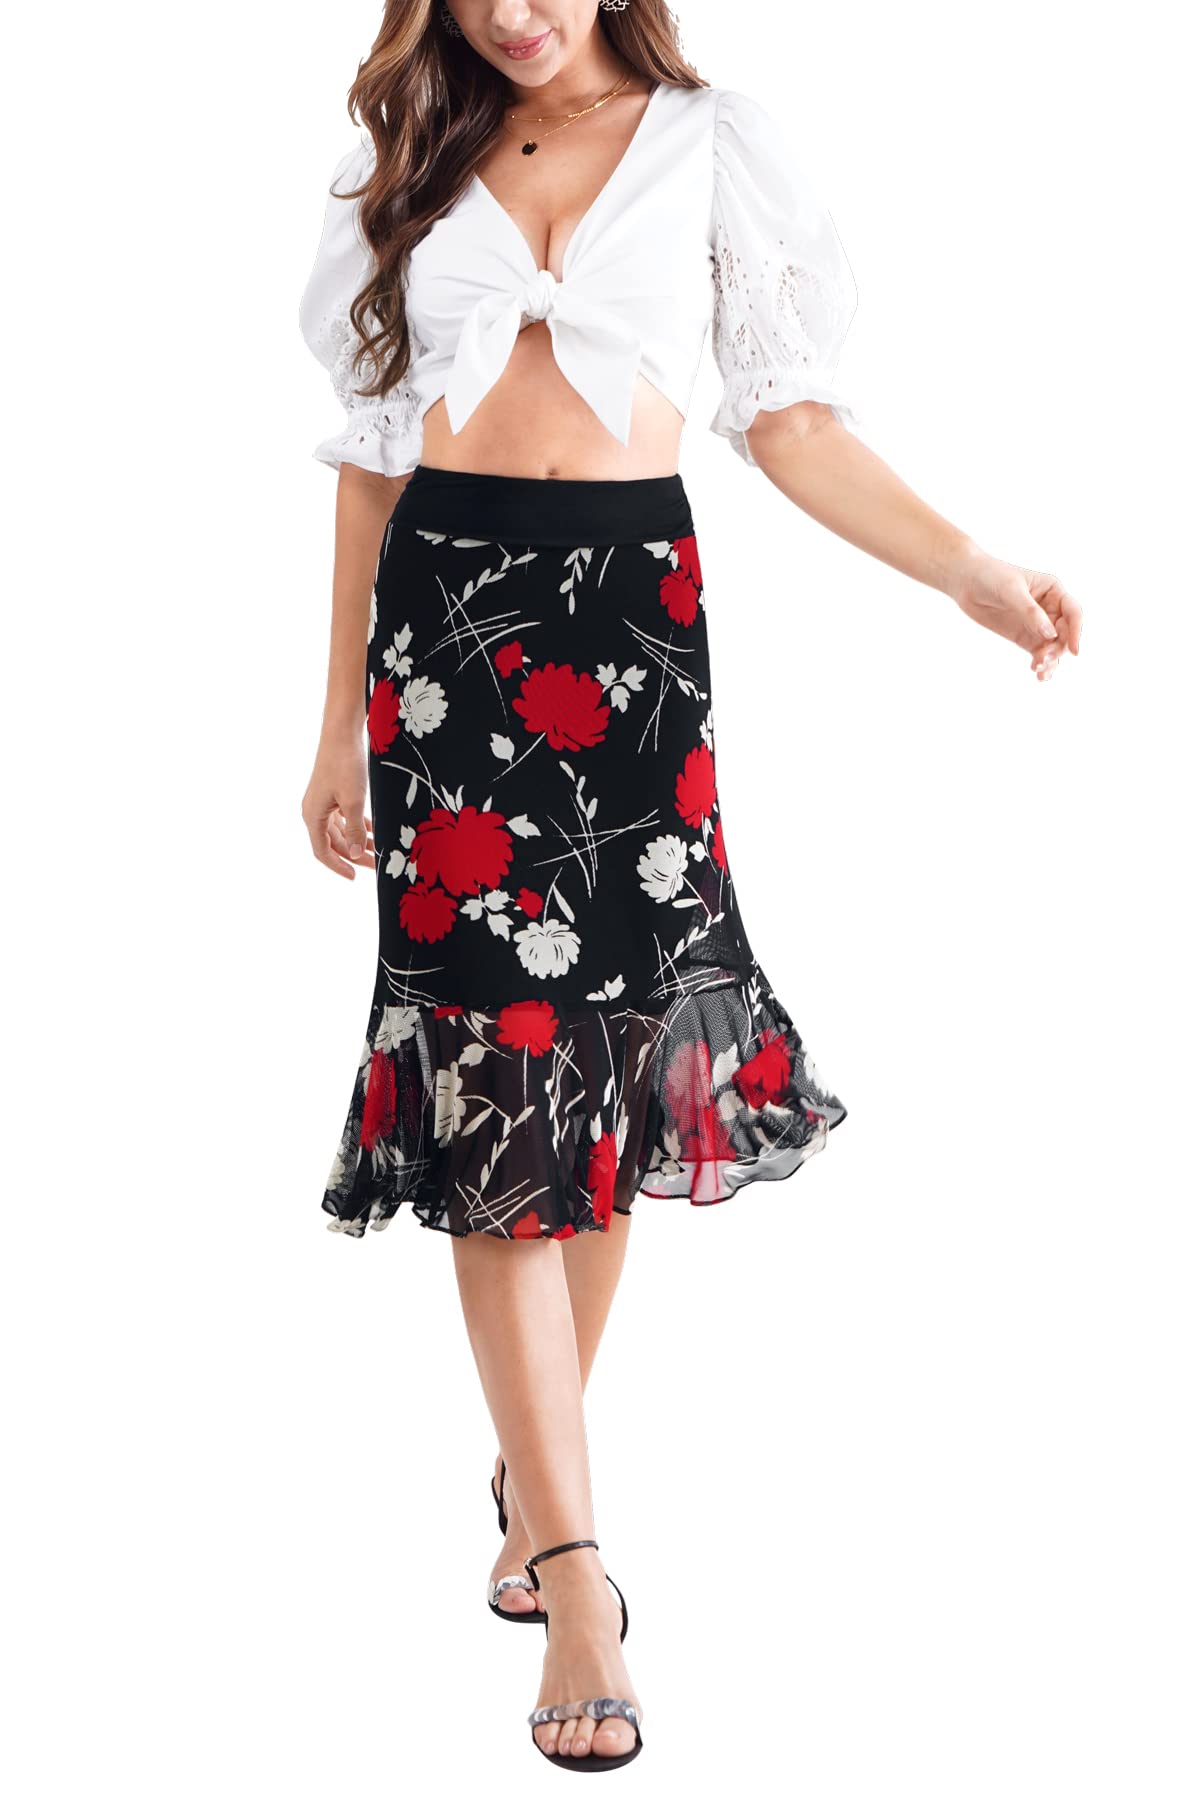 BAISHENGGT Black Womens Summer High Waisted Ruched Mesh Skirt Floral Layers Ruffled Hem Flowy Swing Midi Skirts